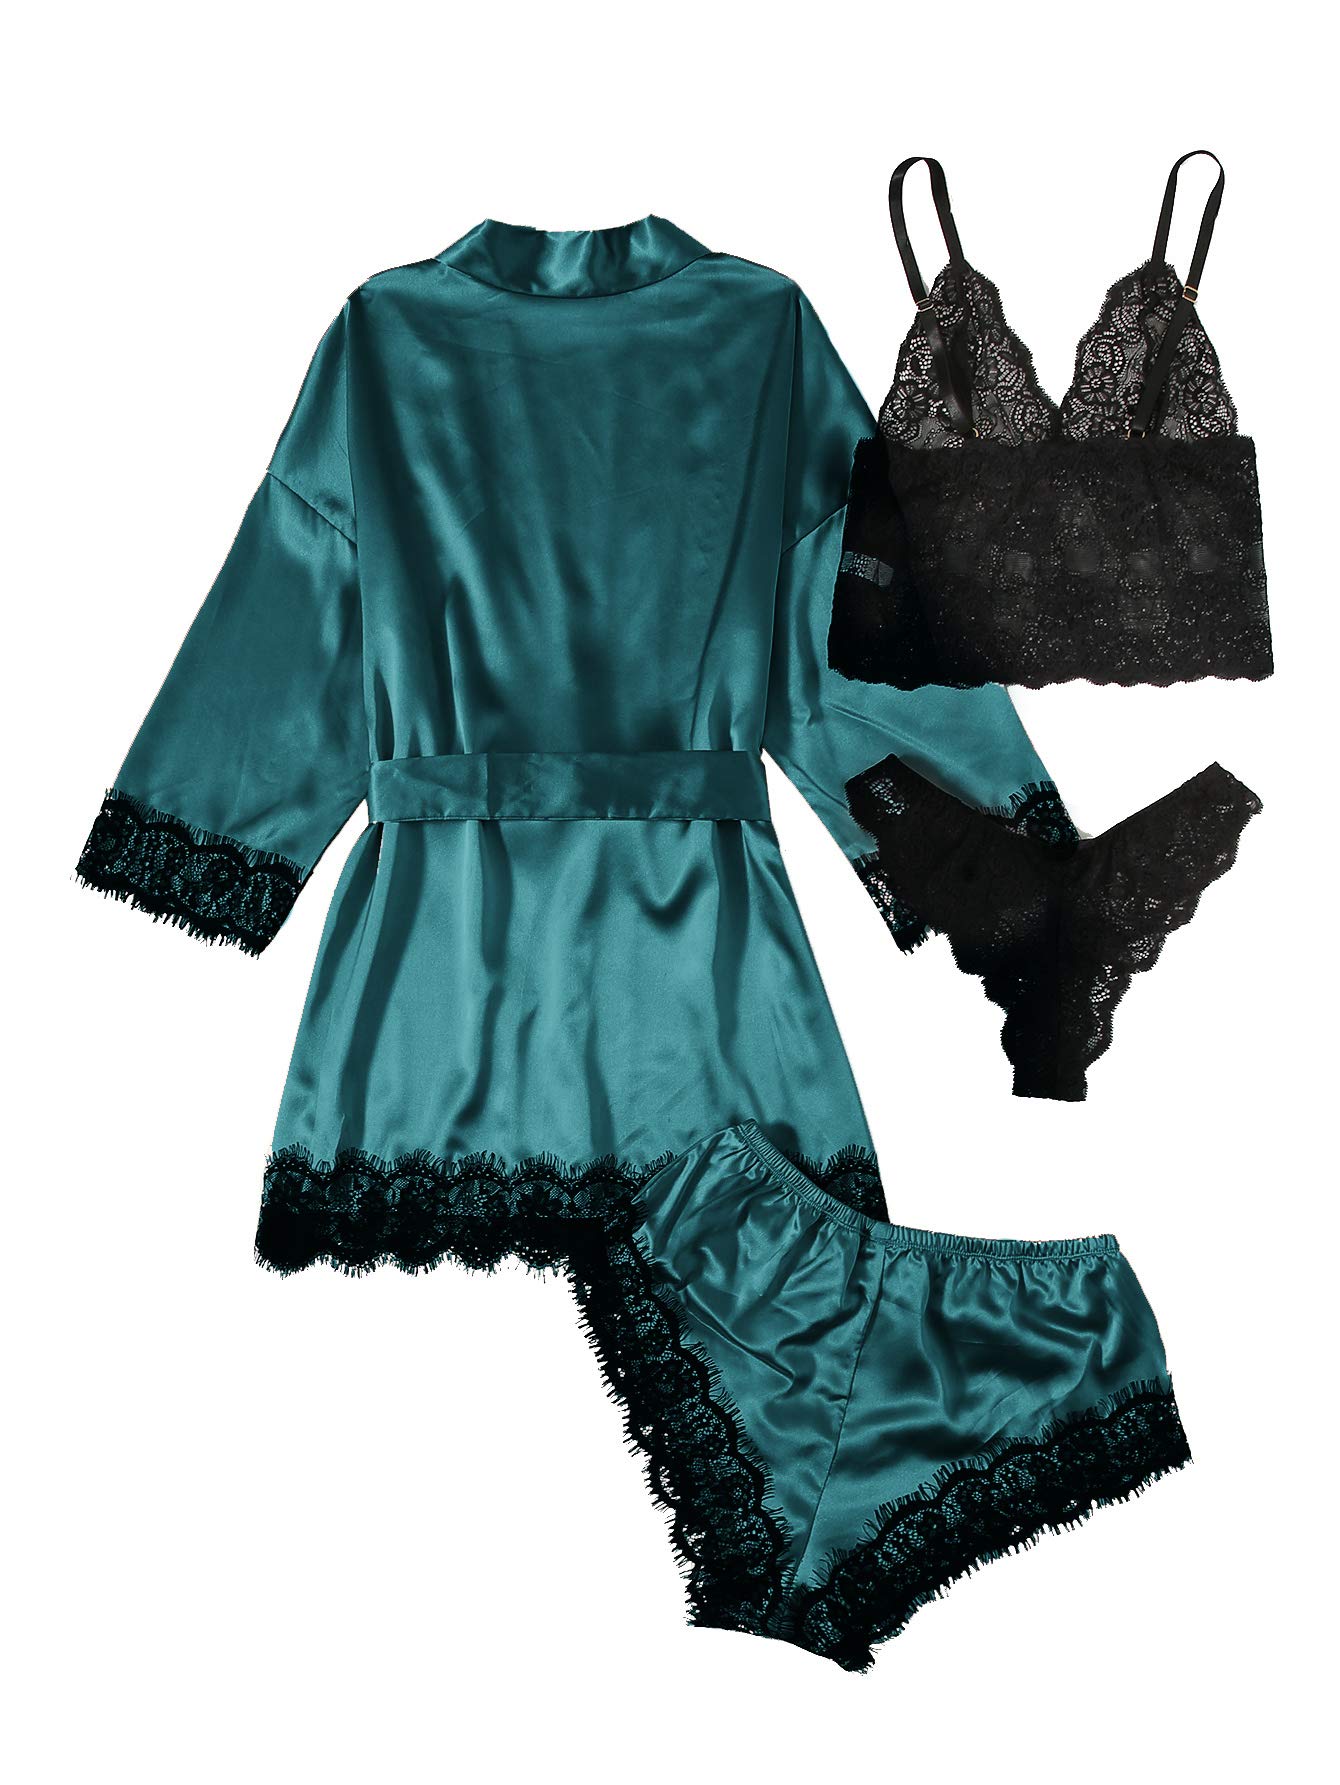 SOLY HUX Women's Satin Pajama Set 4pcs Floral Lace Trim Cami Lingerie Sleepwear with Robe Deep Green M